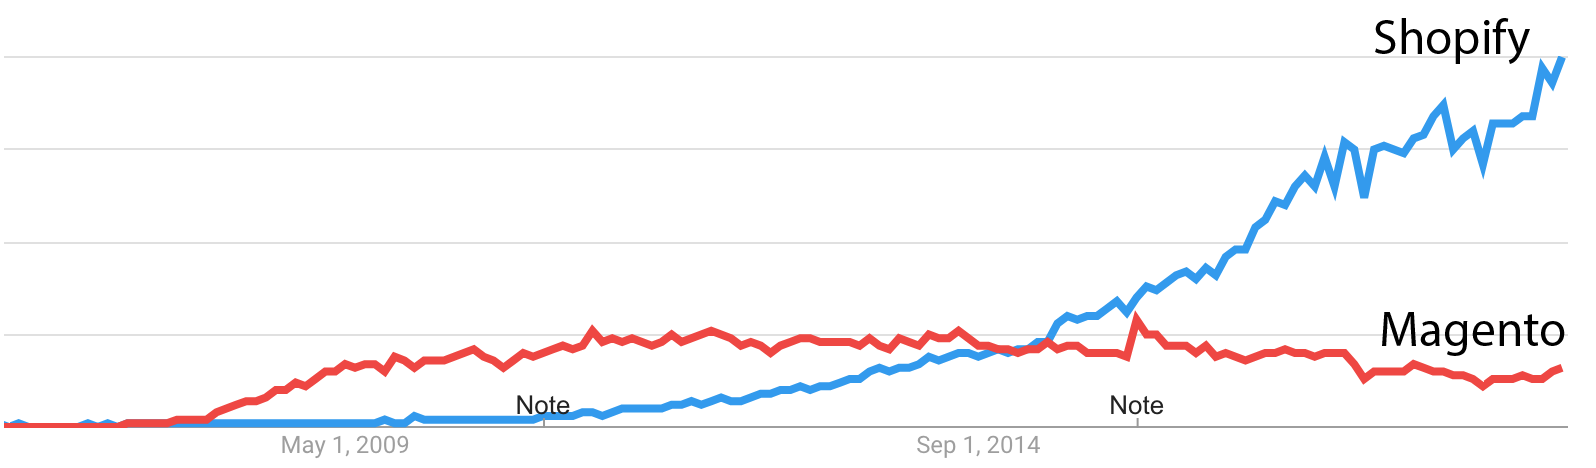 Magento vs Shopify Google trends